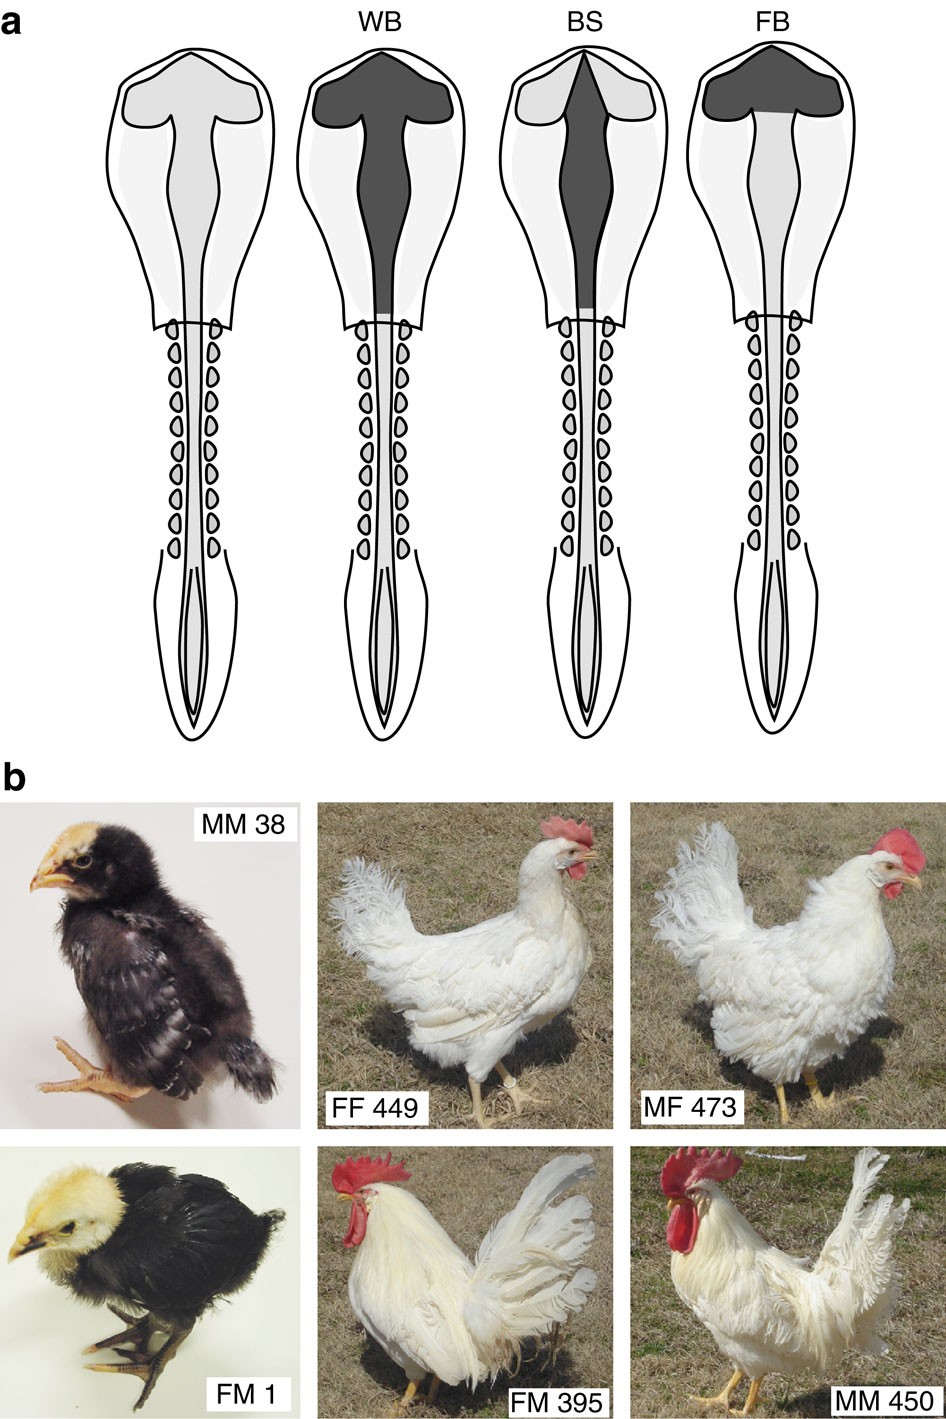 III. The Role of Hormones in Hen Reproduction